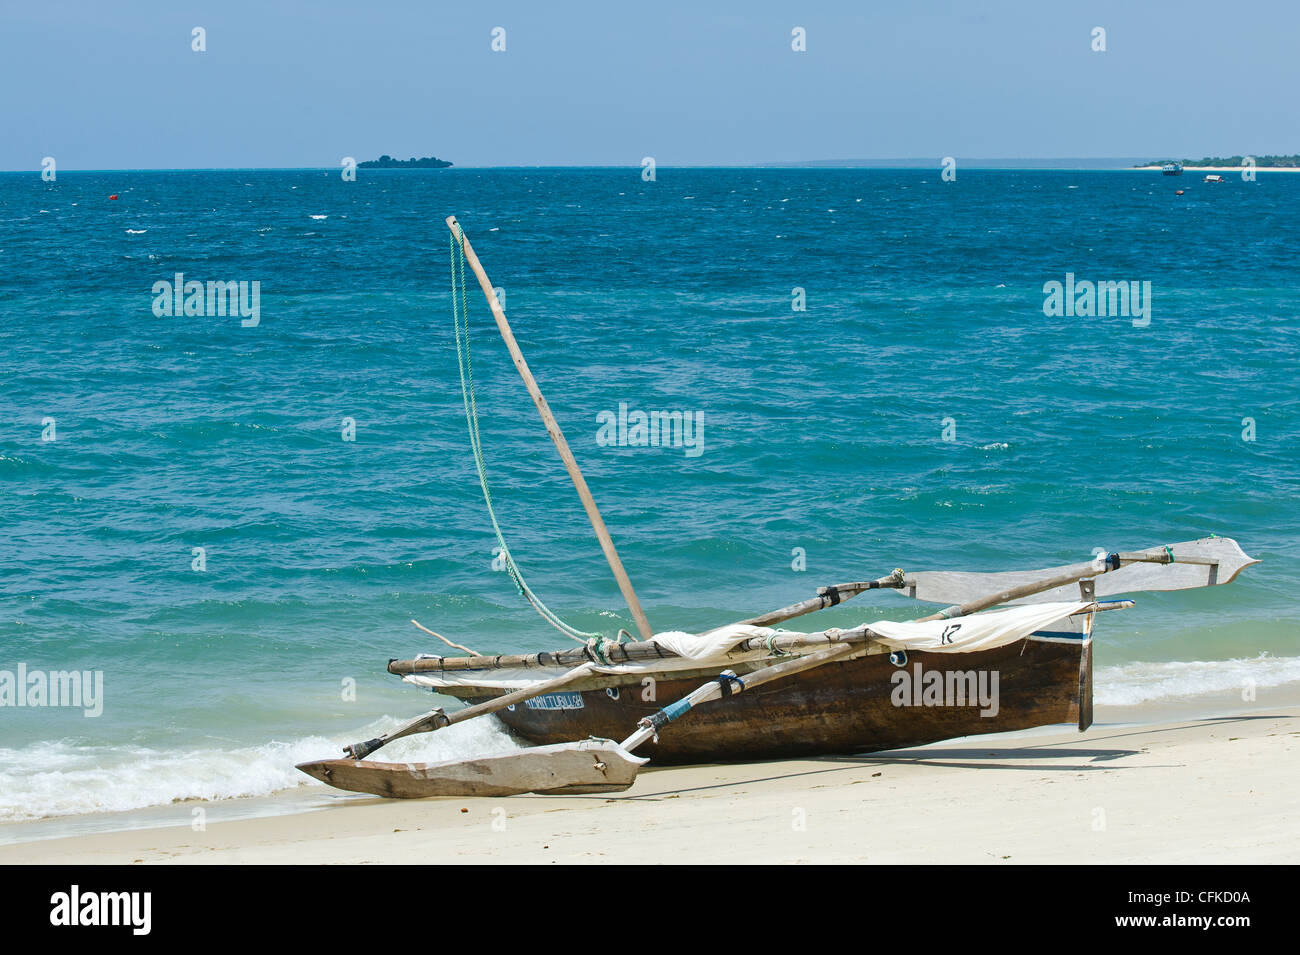 A 'Ngalawa' a traditional double-outrigger canoe on the beach in Stone Town Zanzibar Tanzania Stock Photo